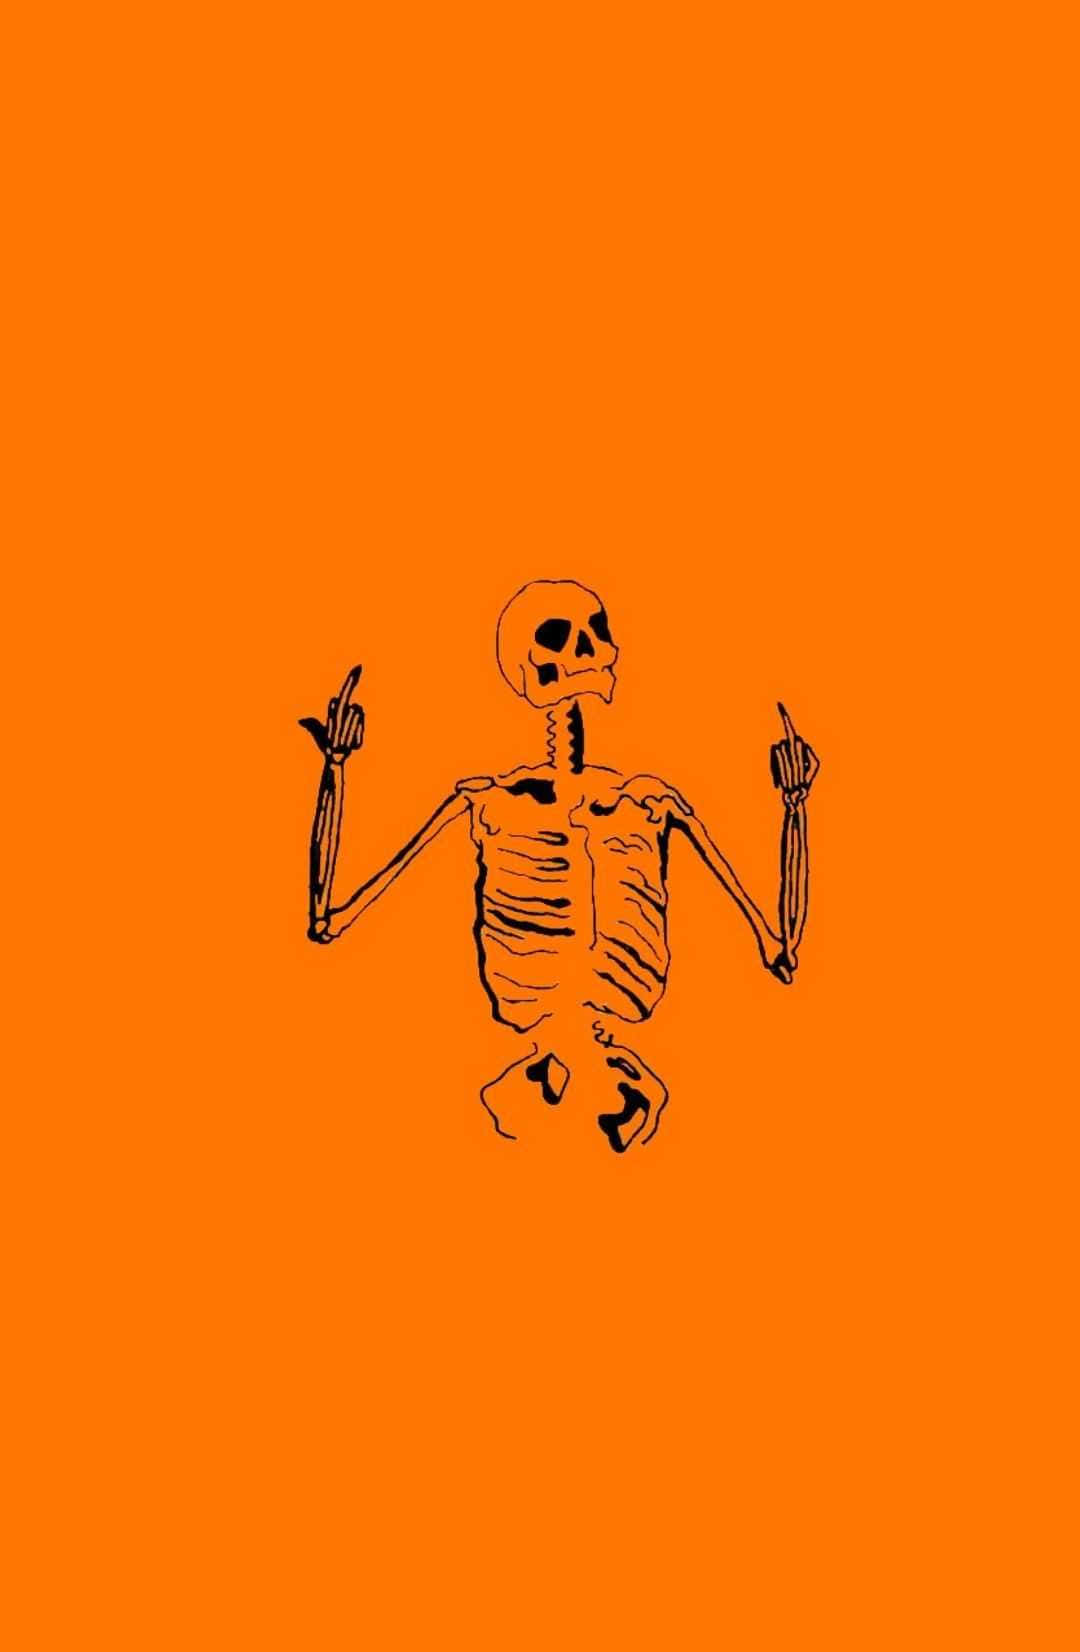 Arteminimalista De Esqueleto Para Fondo De Pantalla De Halloween En Iphone.